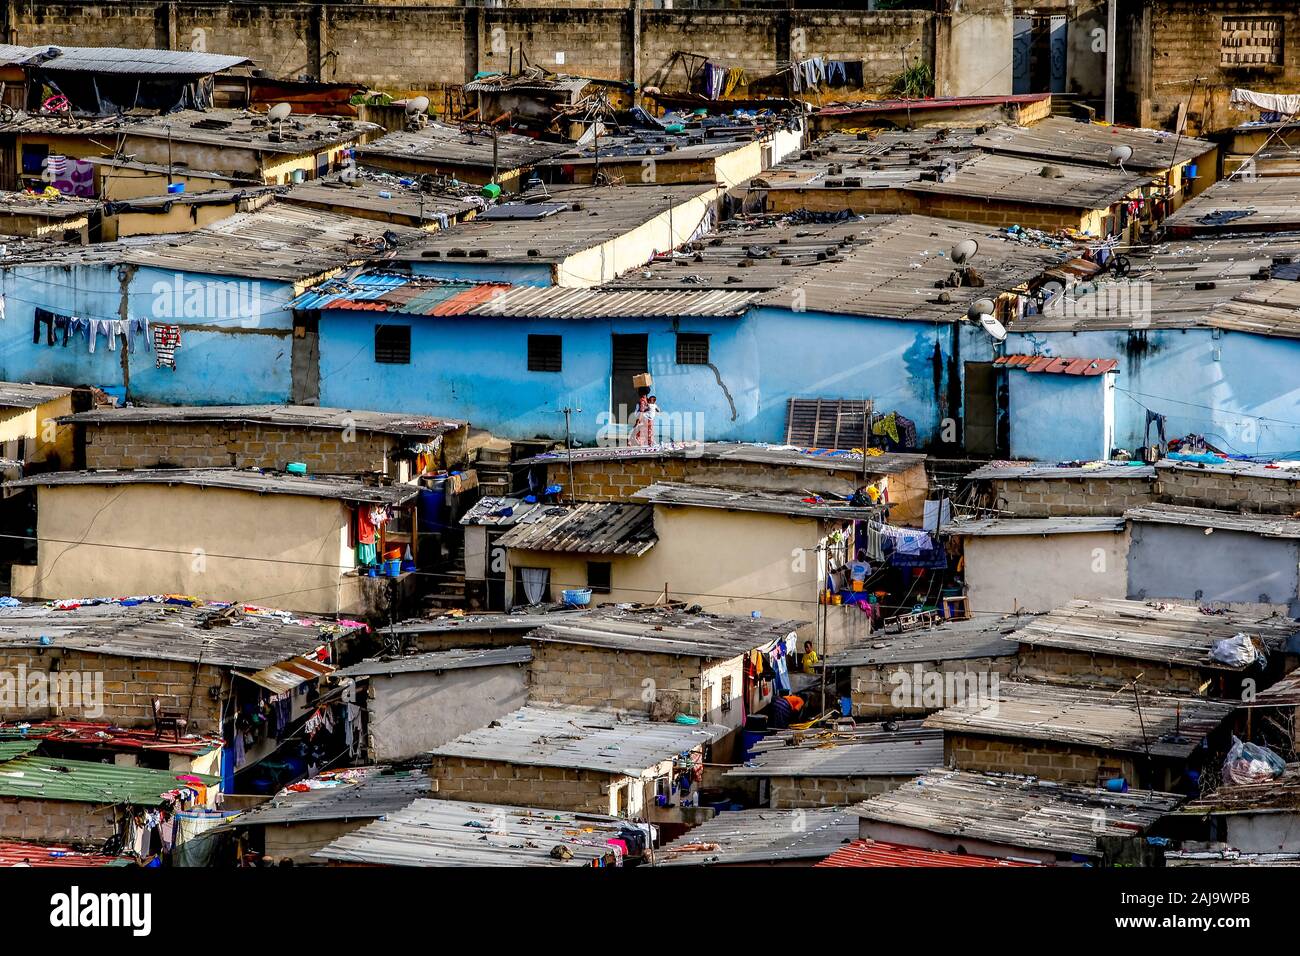 Slums in abidjan, ivory coast Stock Photo